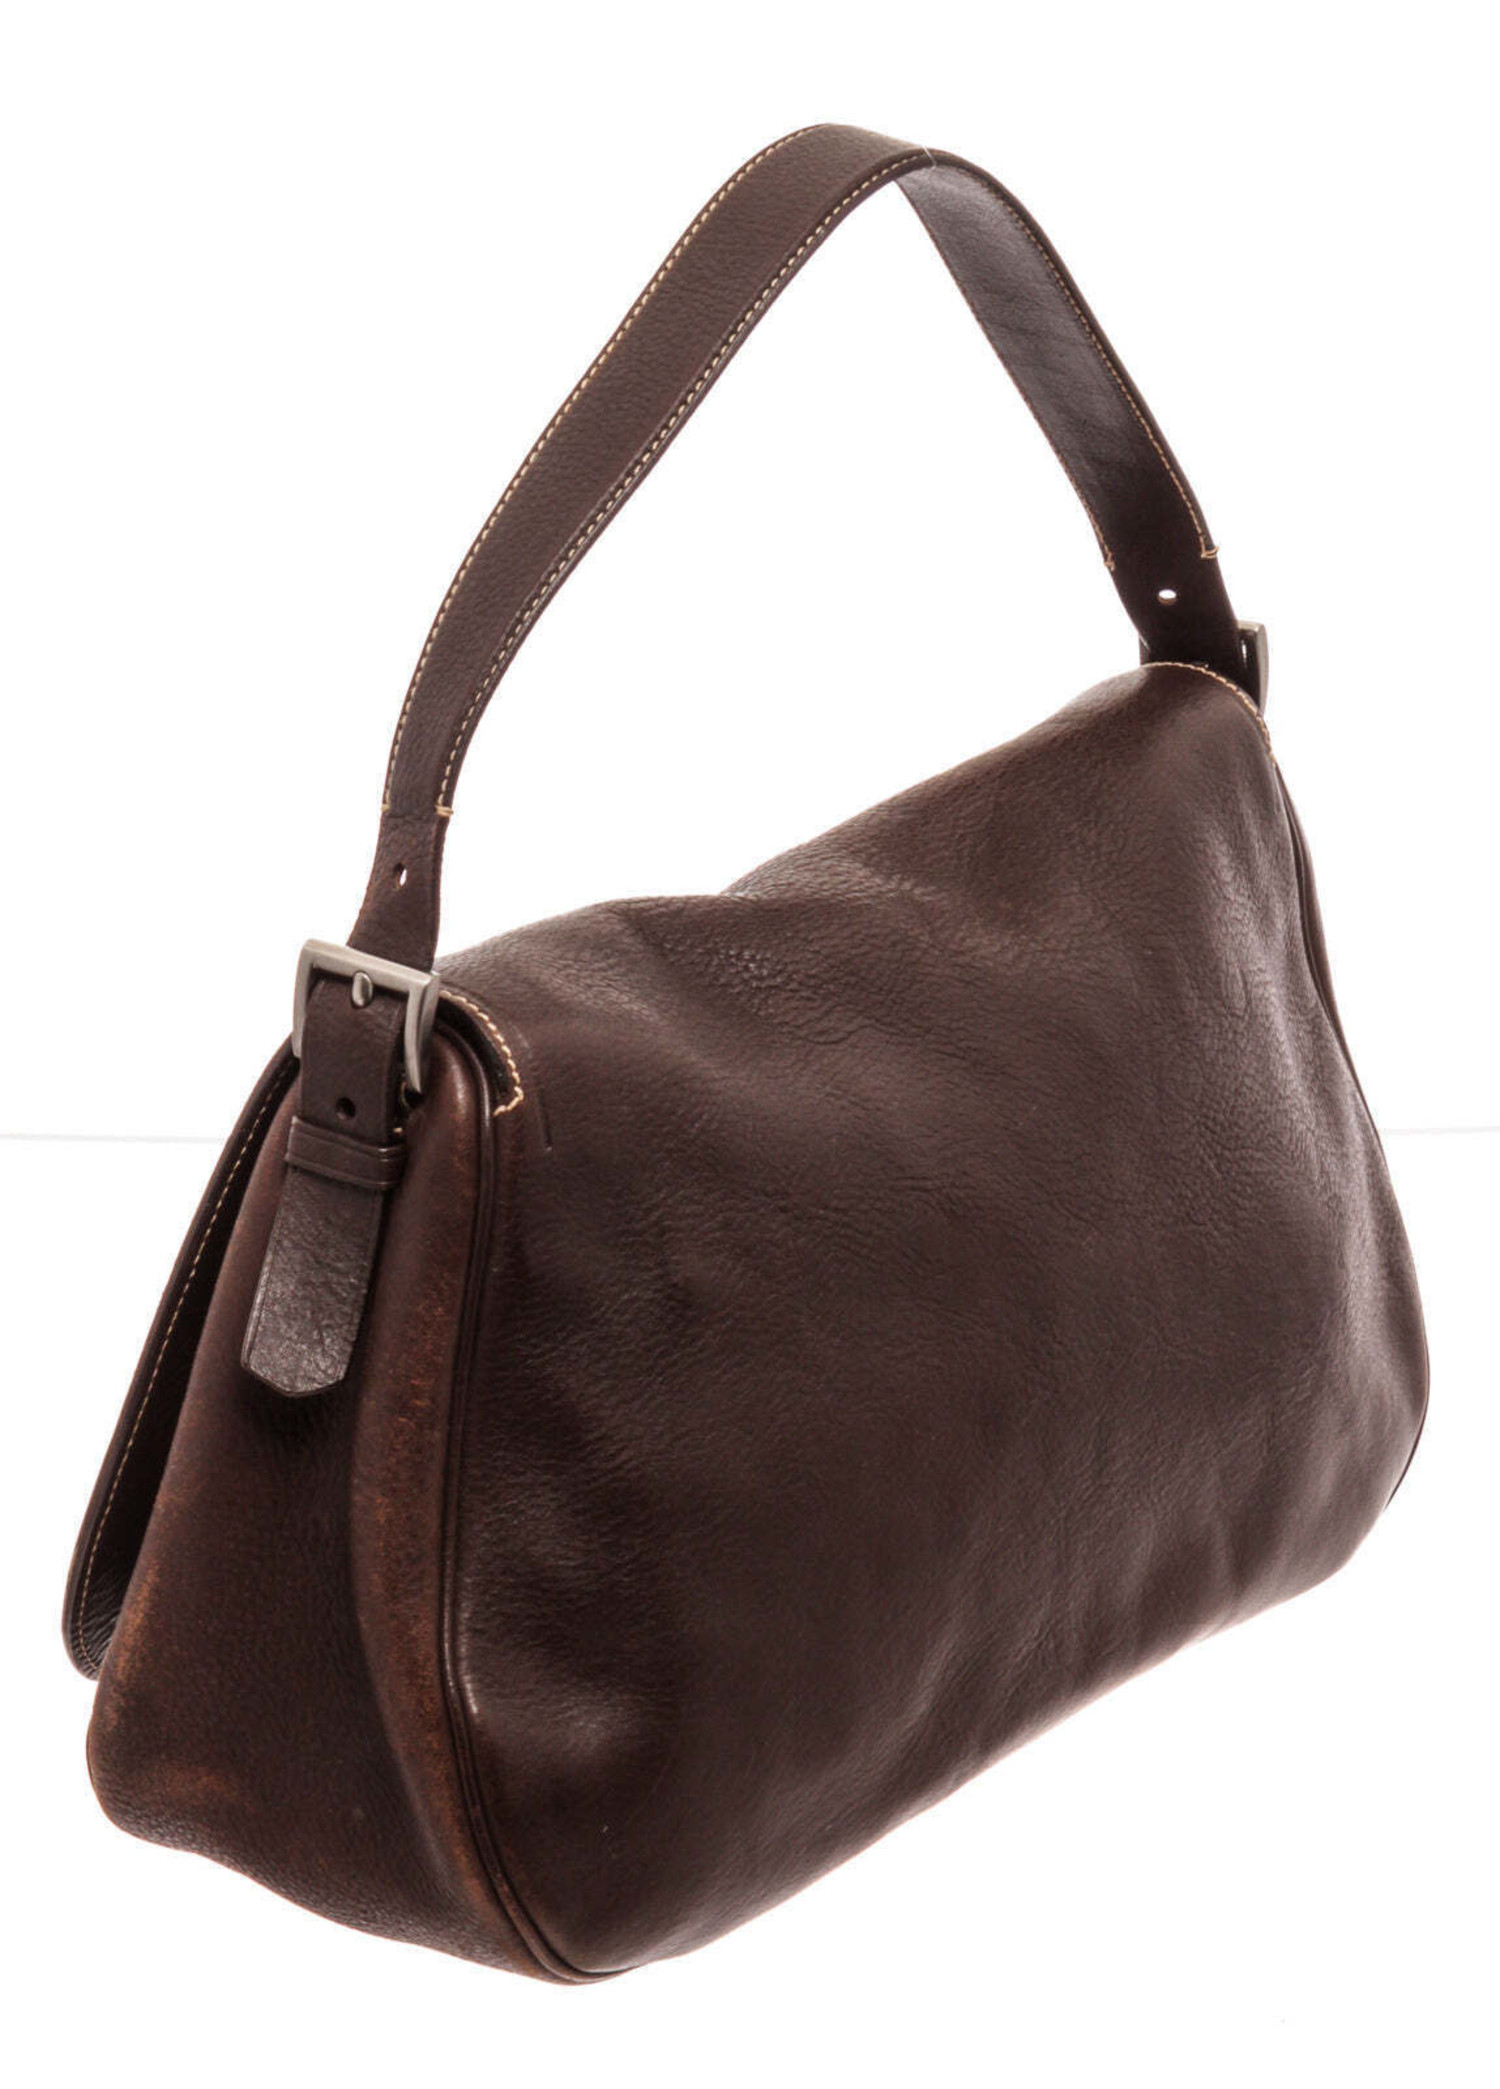 prada brown leather shoulder bag - Marmalade